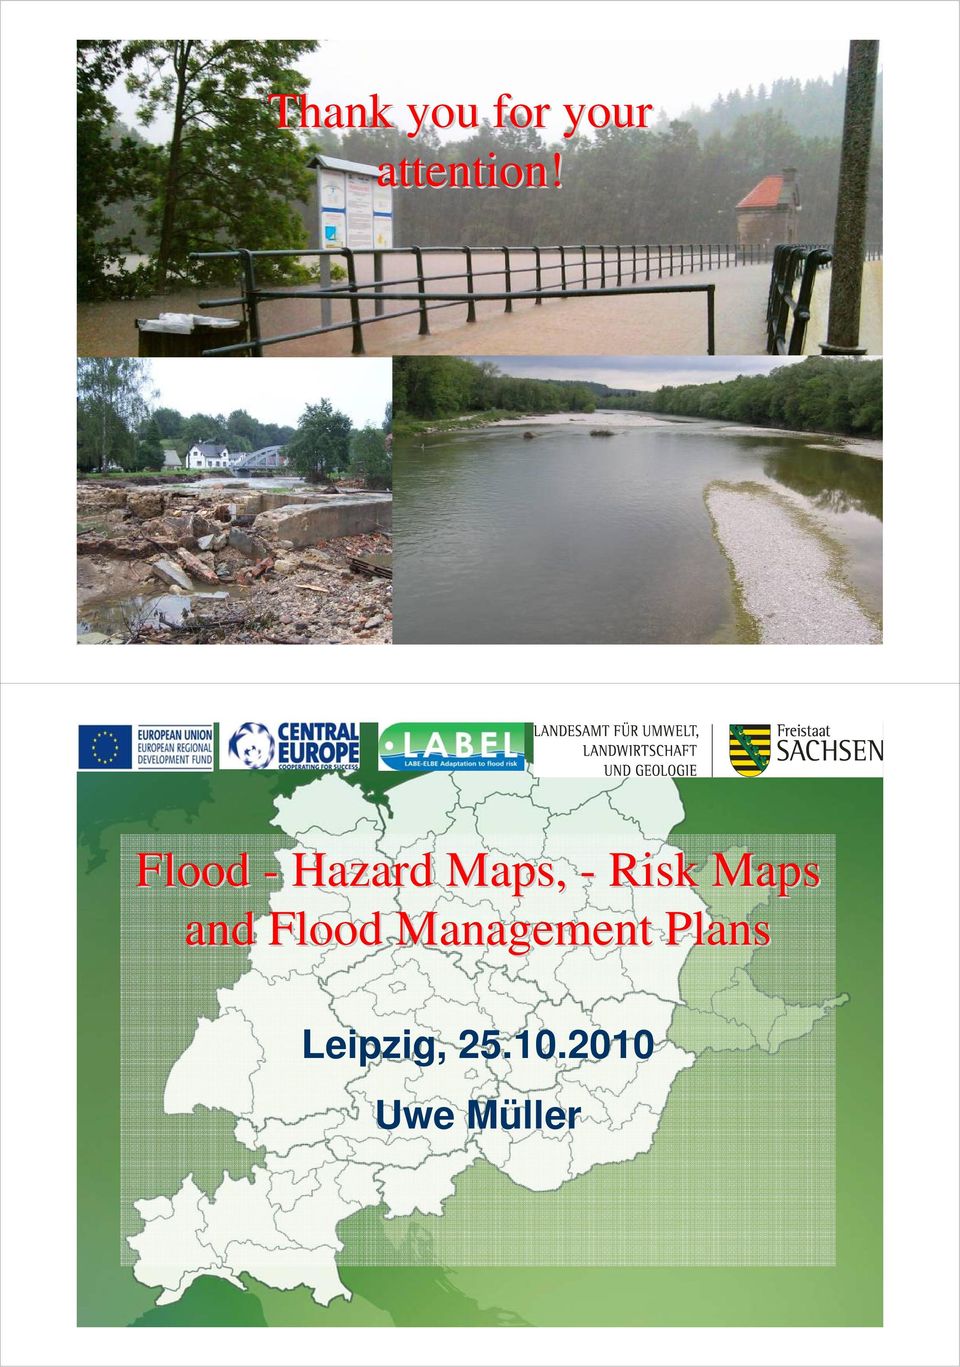 Flood - Hazard Maps, - Risk Maps and Flood Management Plans